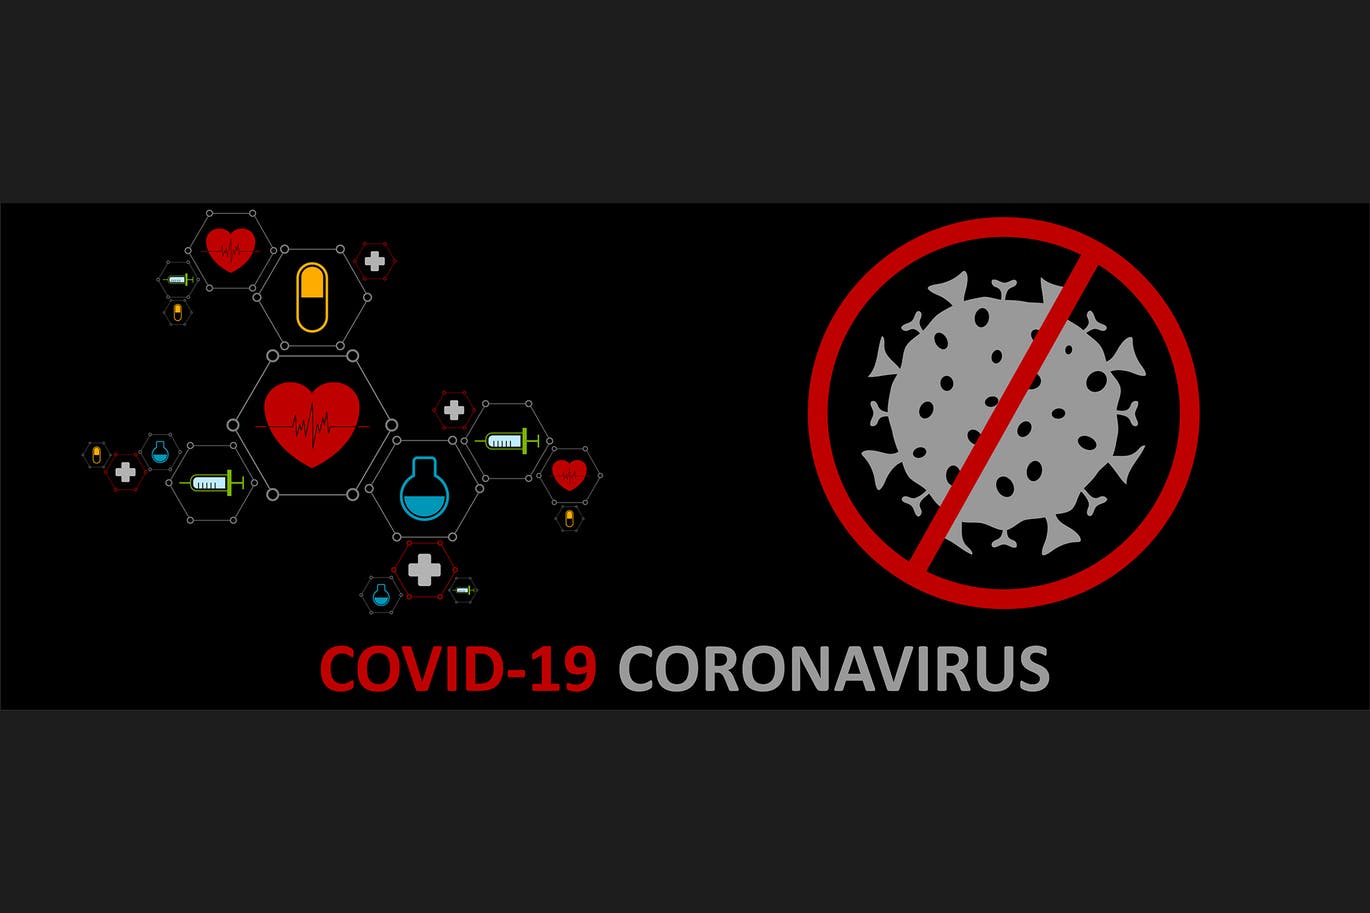 冠状病毒COVID-19医学主题抽象背景图 Coronavirus COVID-19 medical abstract background插图